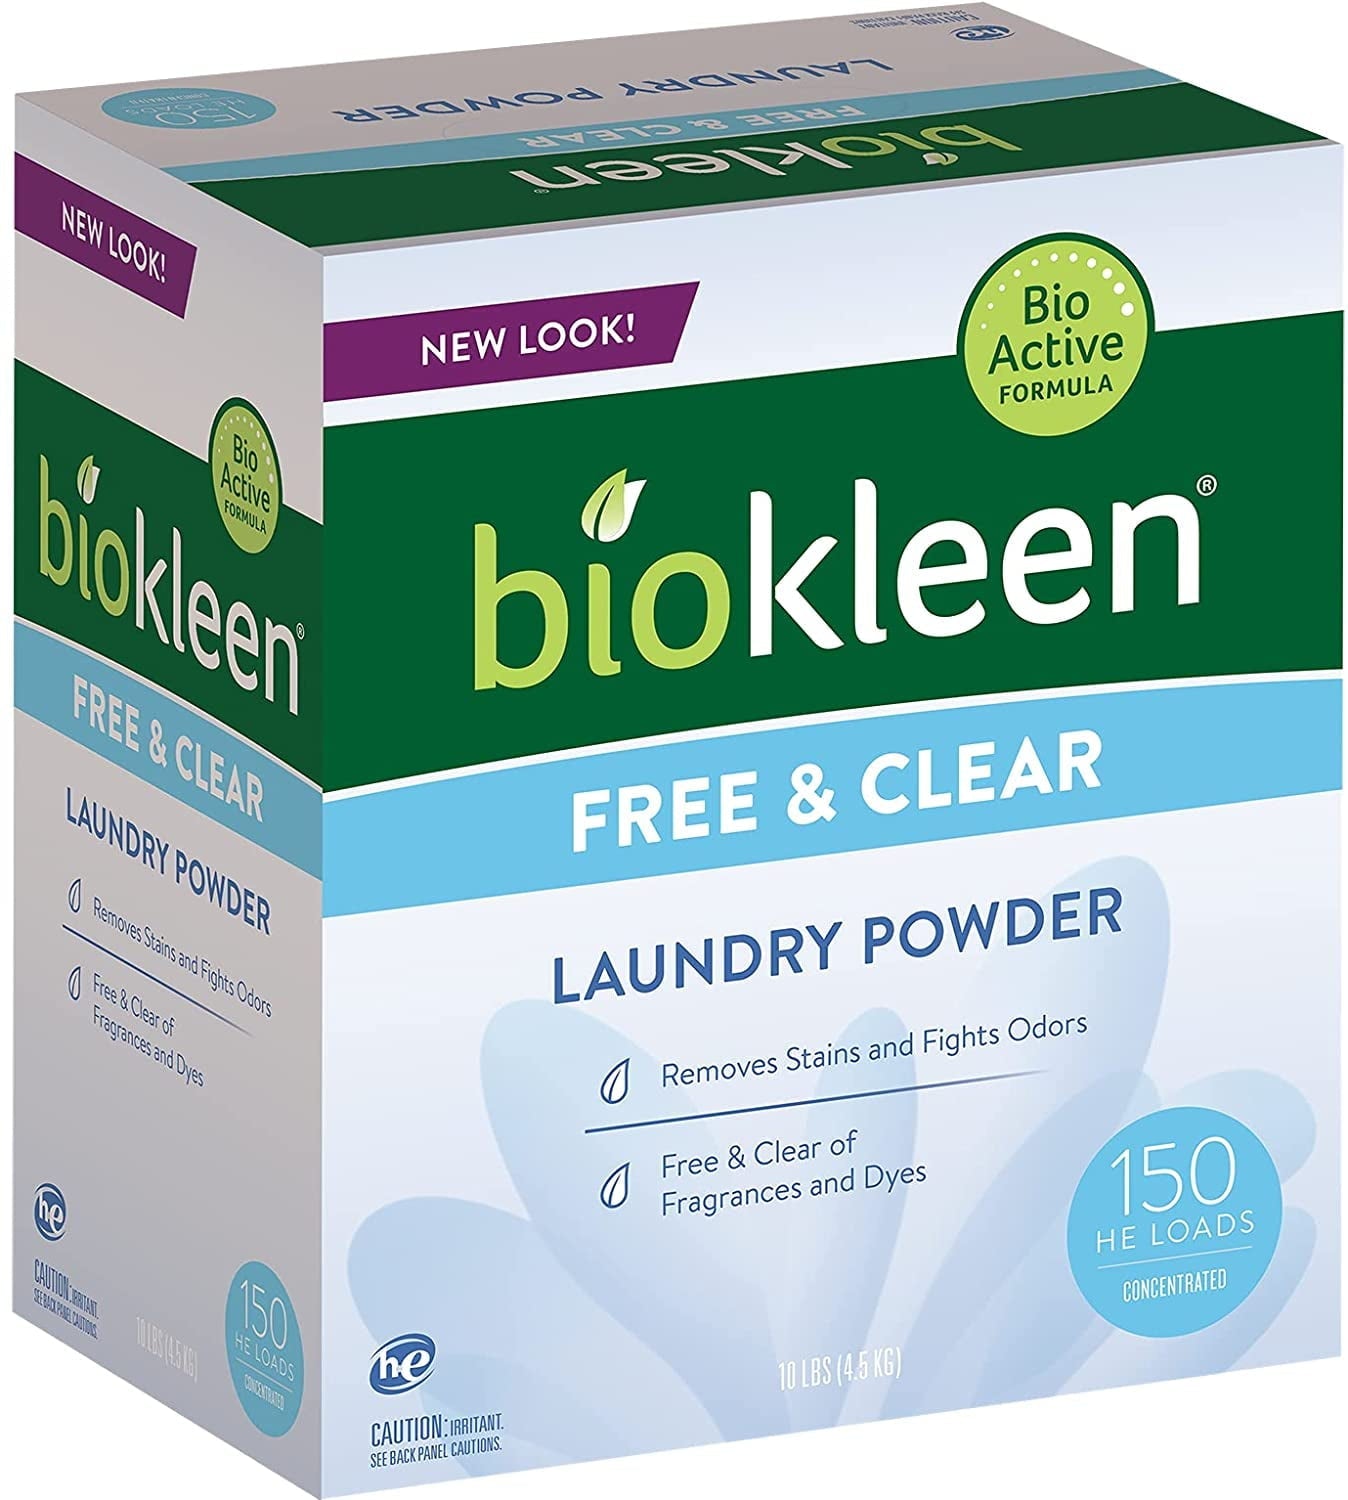 Biokleen Laundry Powder Free & Clear 10 lb Box